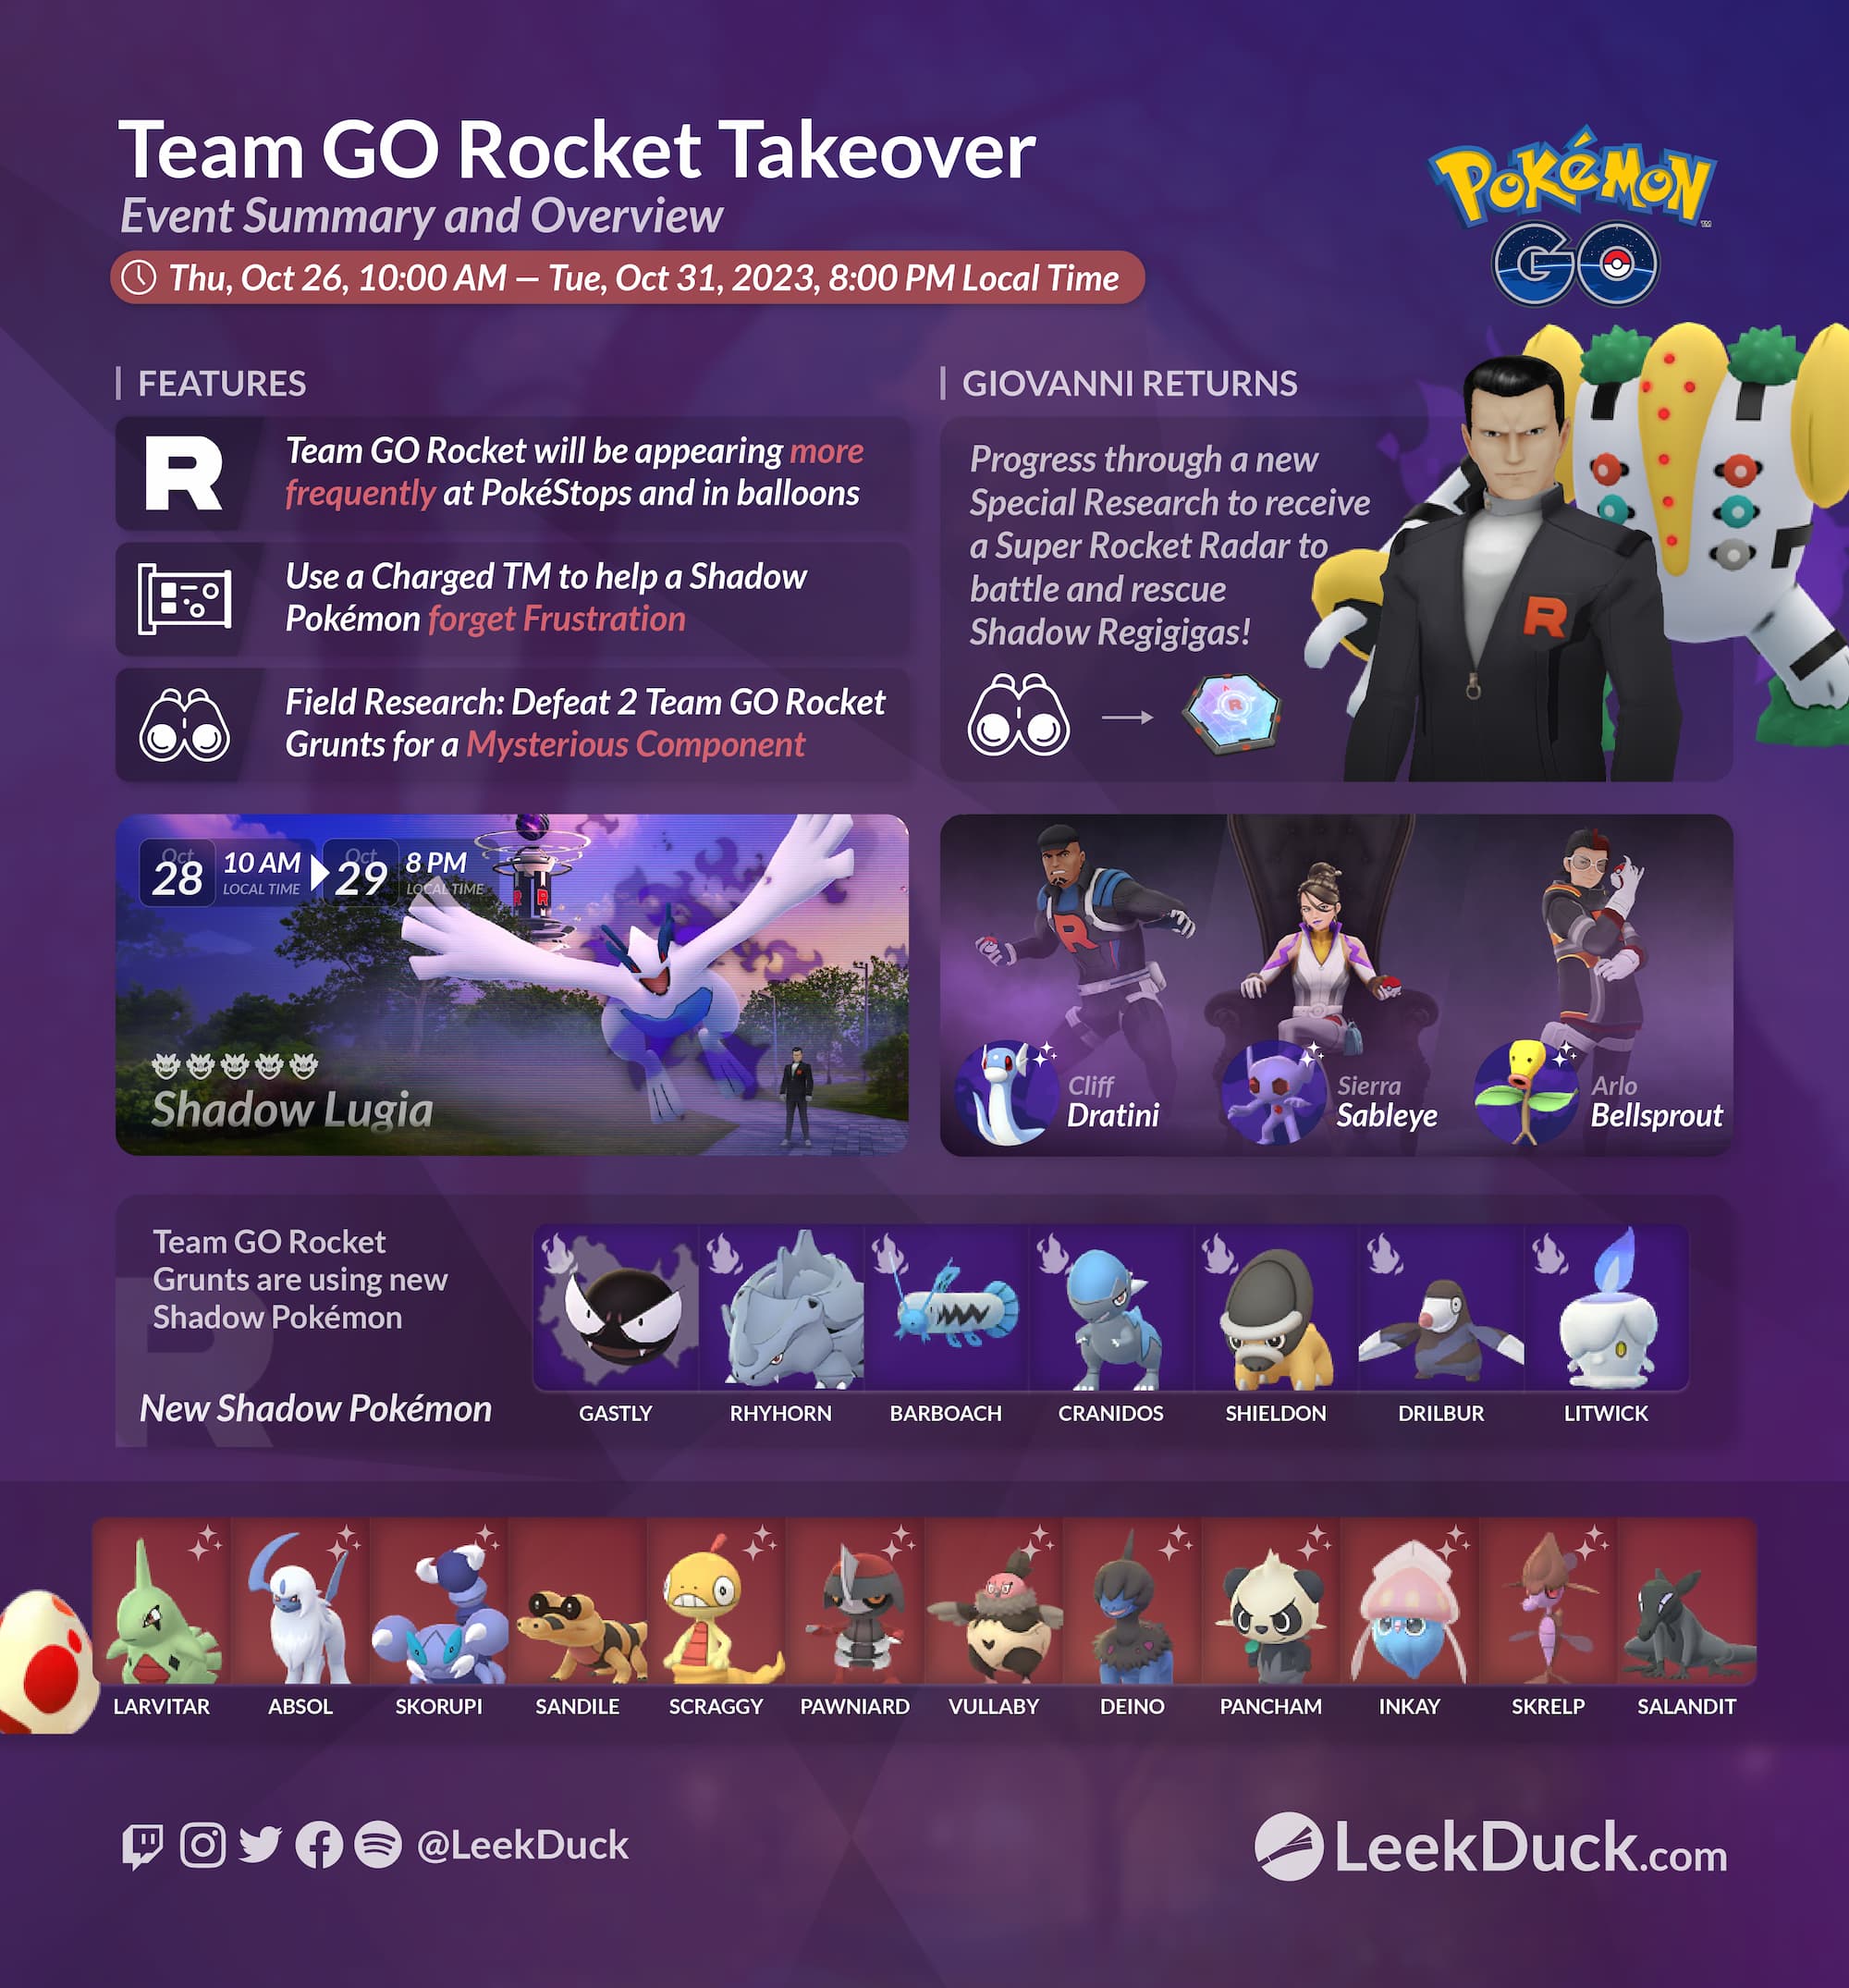 Team GO Rocket Takeover - Leek Duck